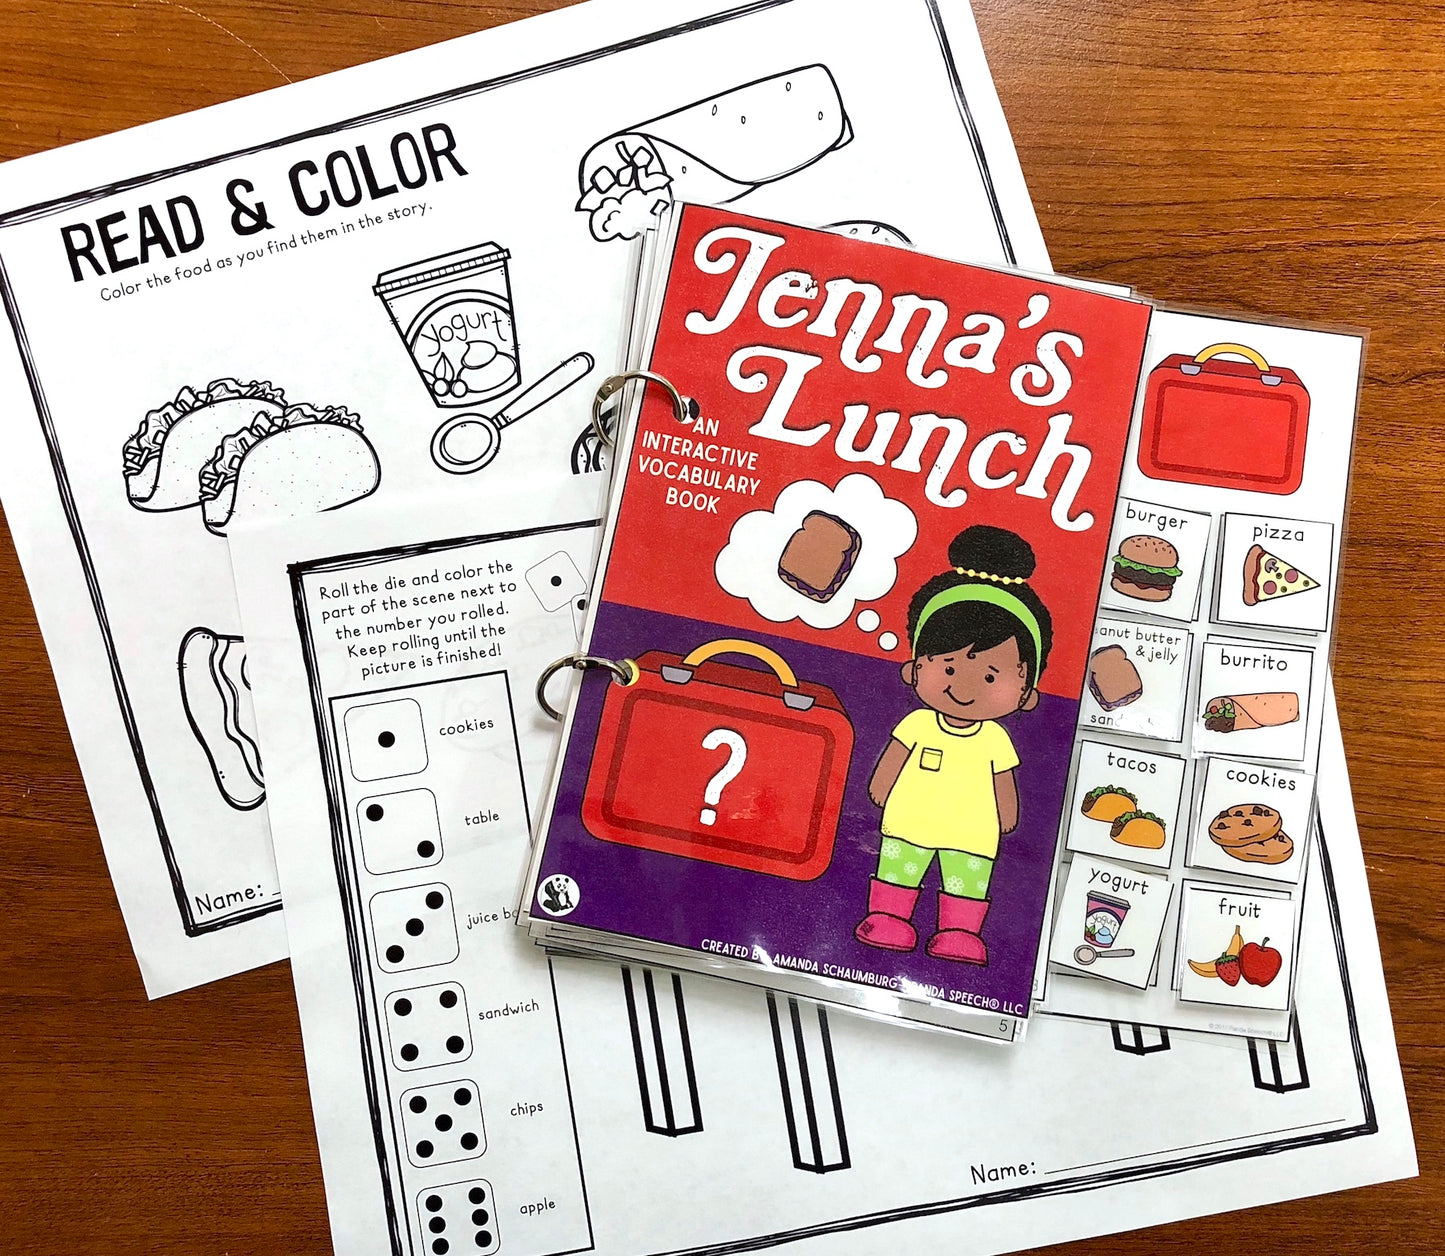 Jenna's Lunch Lift a Flap Book (Print & Make Book)